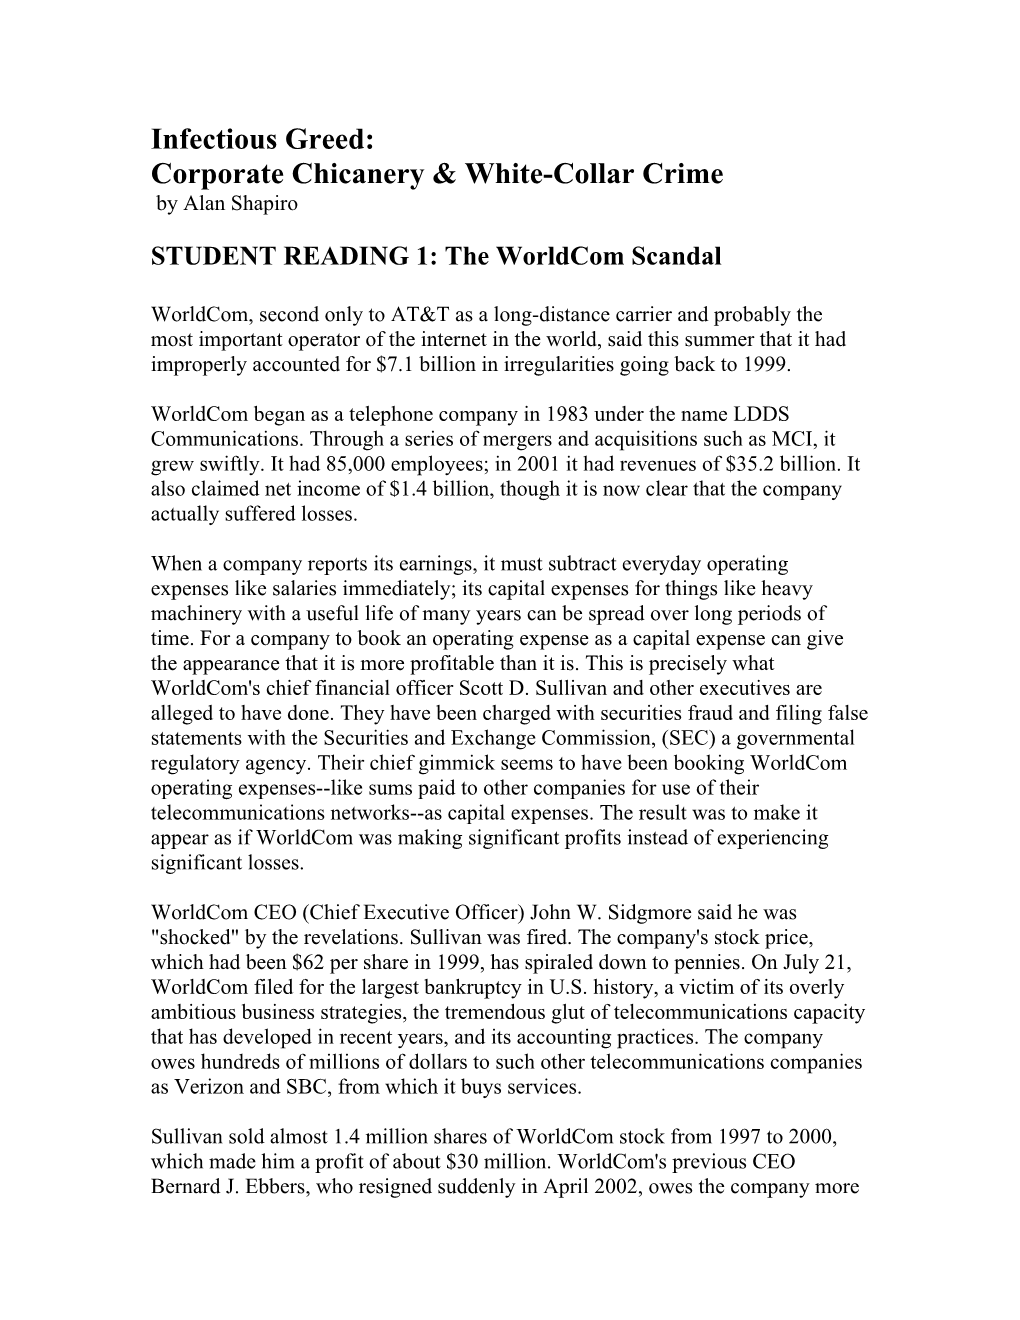 Corporate Chicanery & White-Collar Crime